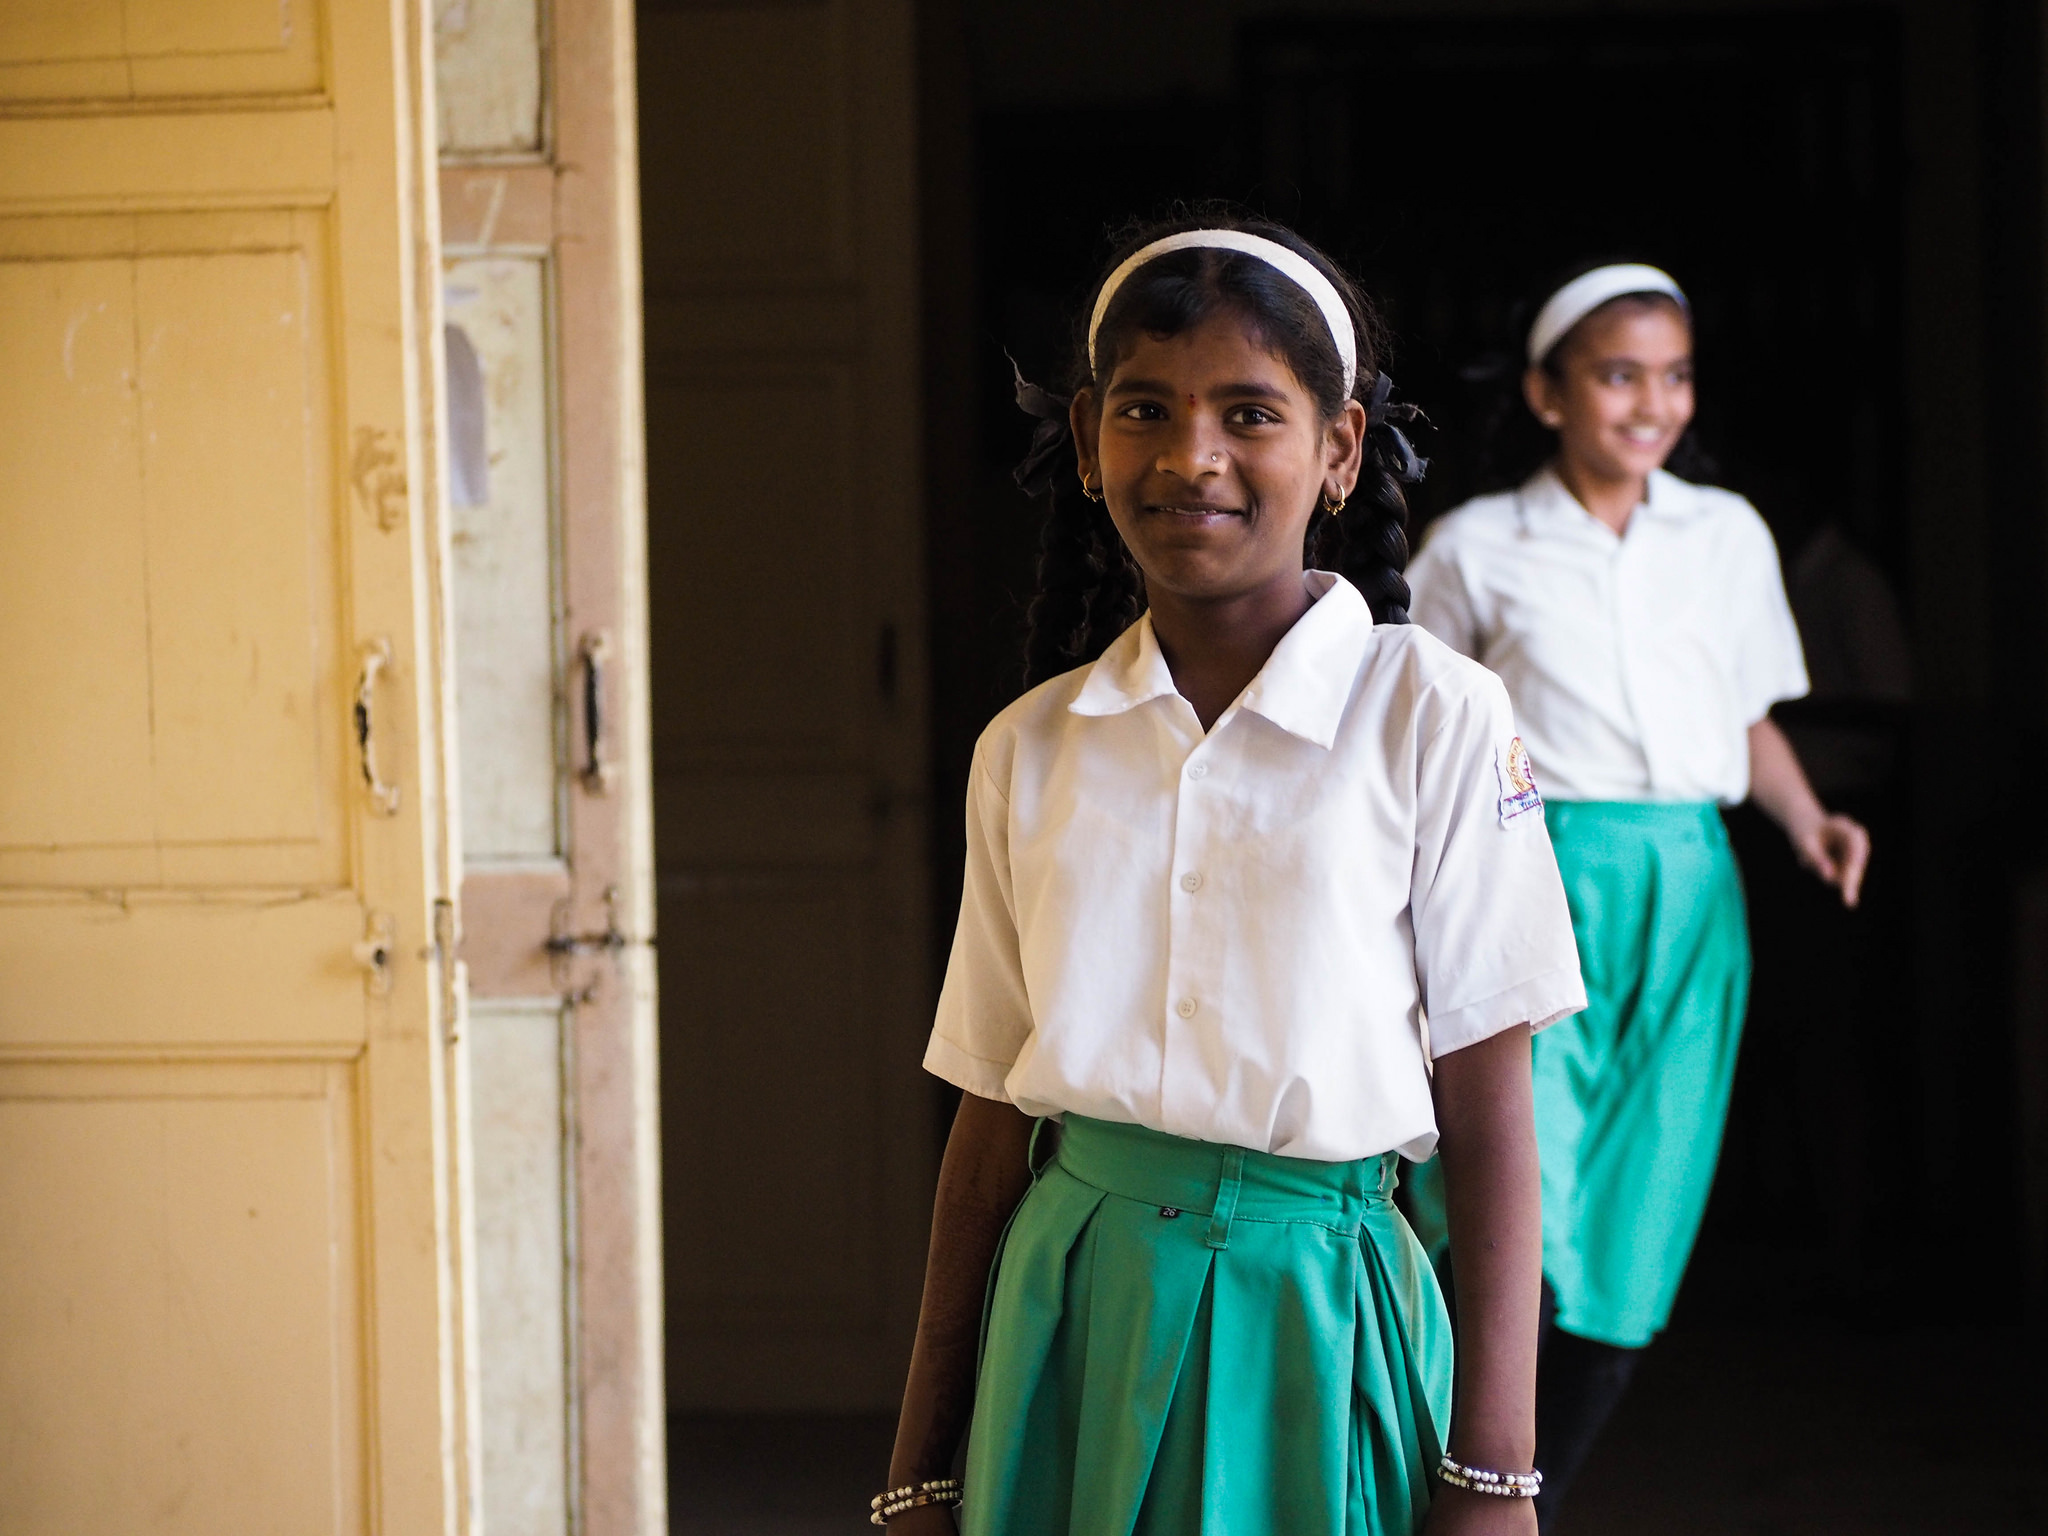 Half of Indian teenage girls underweight, anaemic; 4 in 10 defecate in open  (Business Standard) - CGIAR